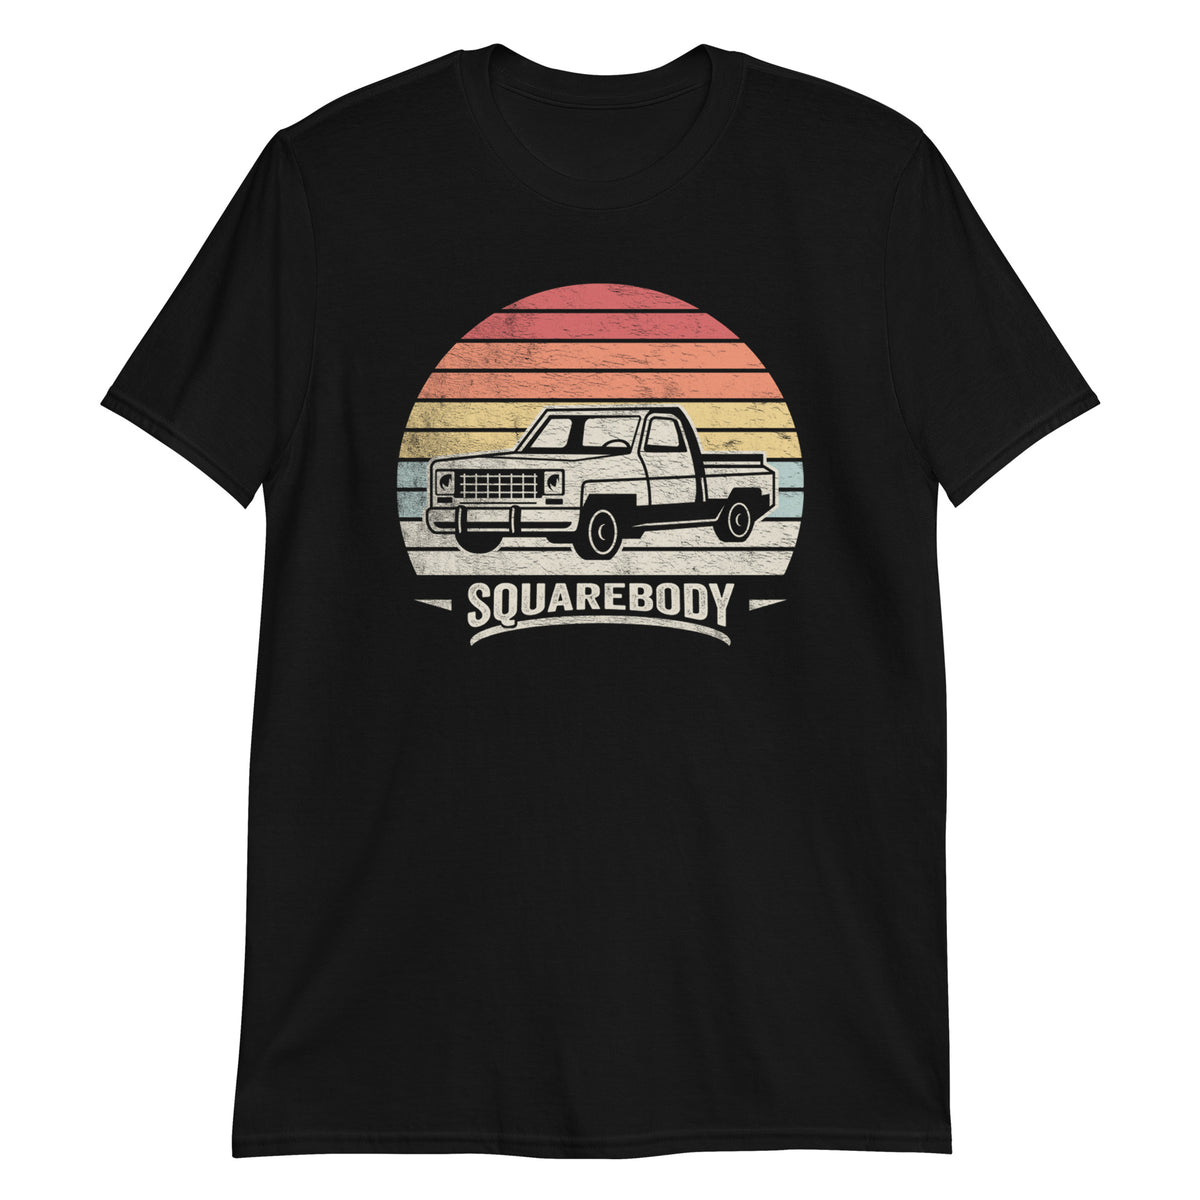 Squarebody T-Shirt